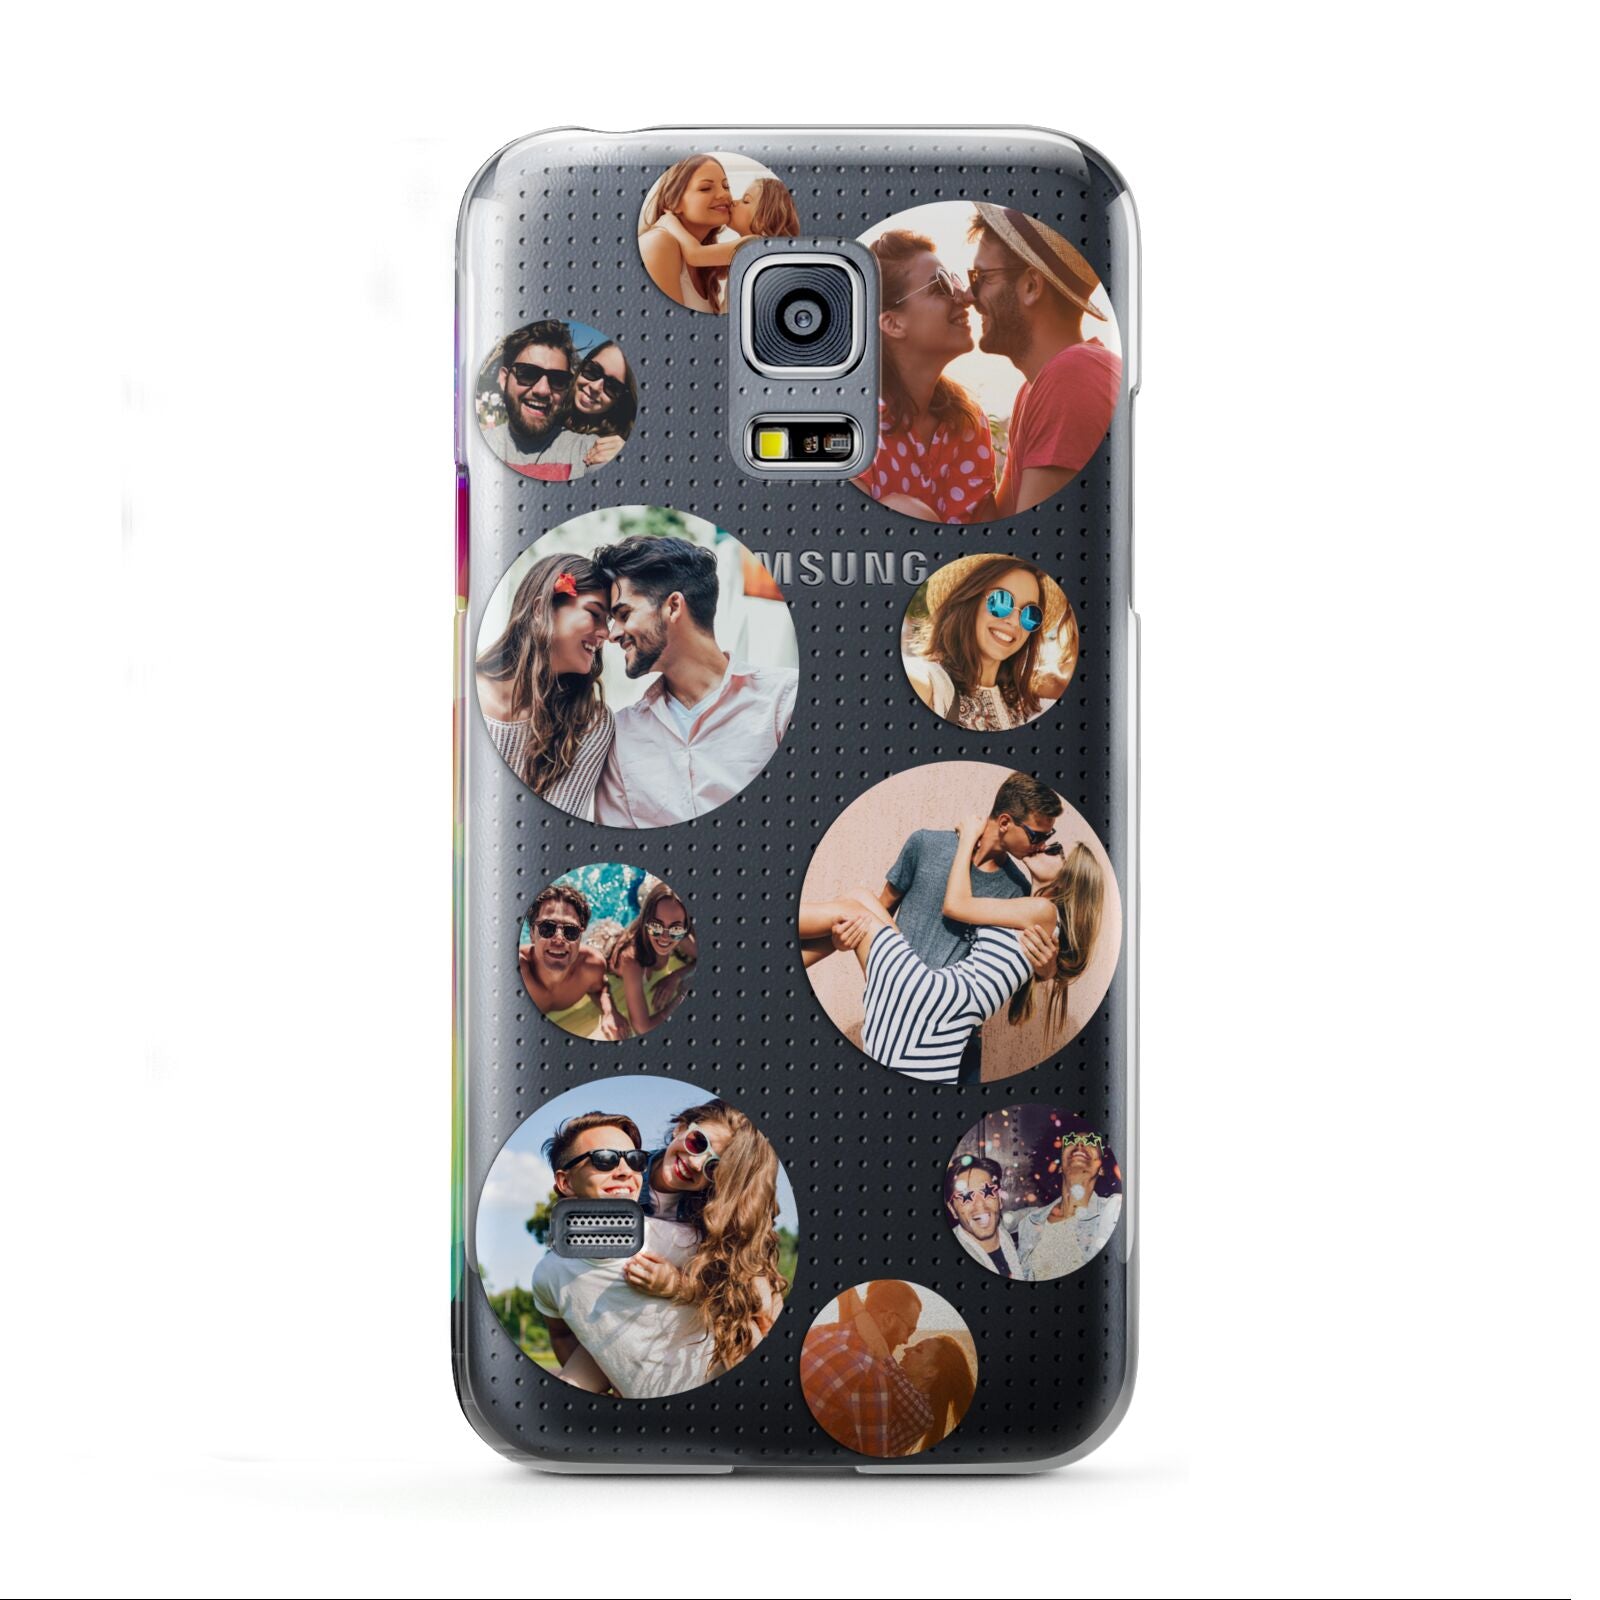 Multi Circular Photo Collage Upload Samsung Galaxy S5 Mini Case